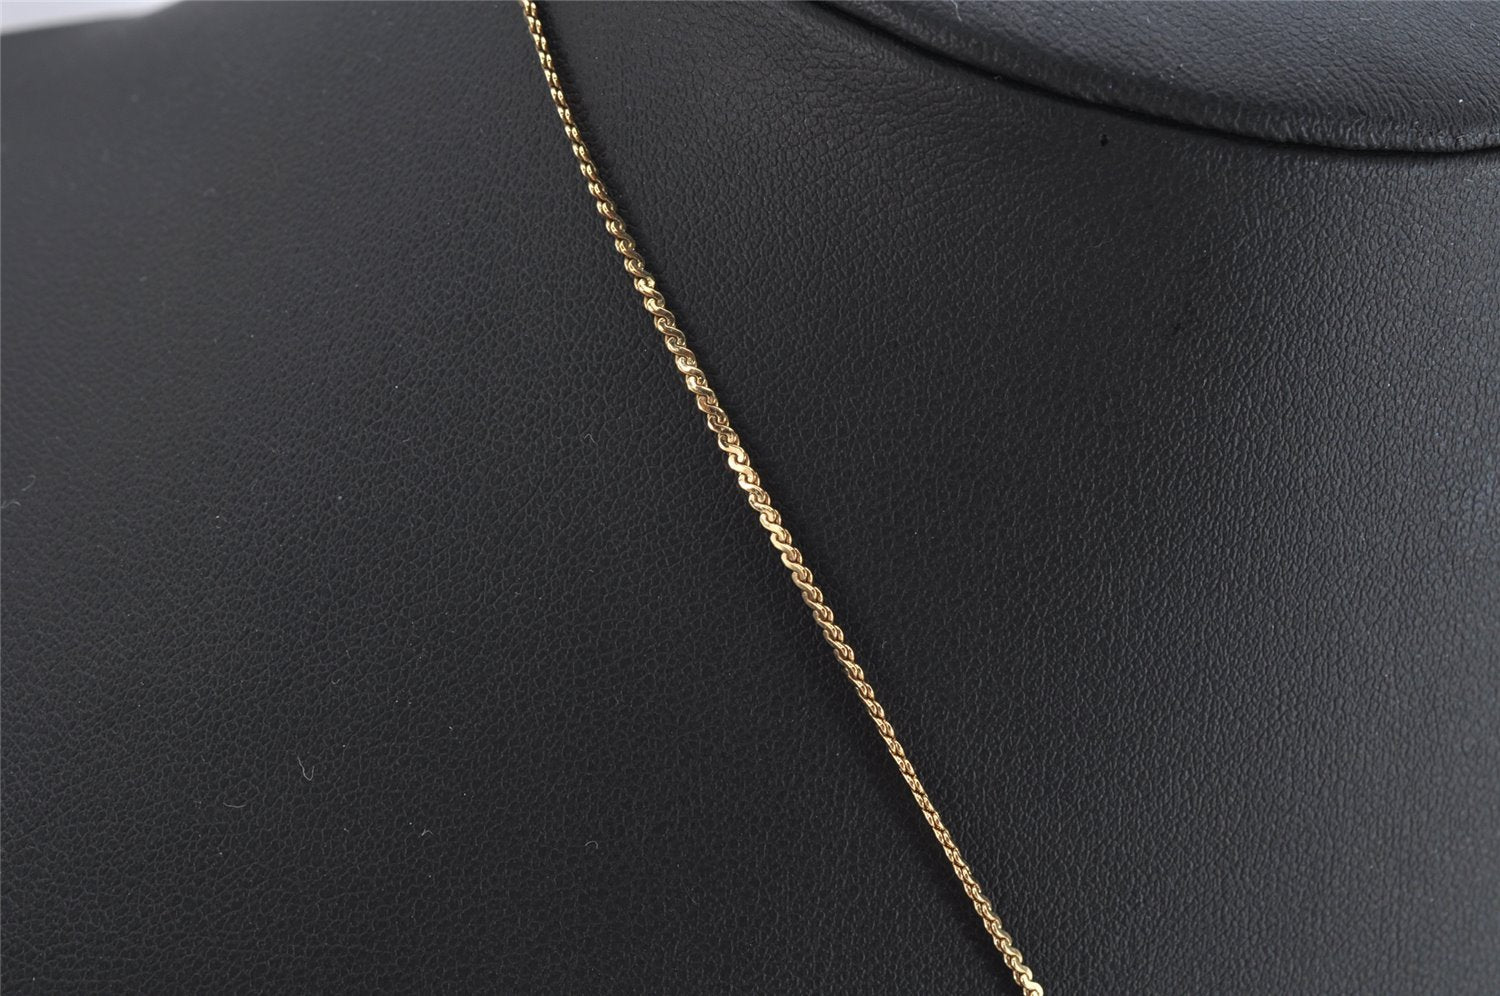 Authentic Christian Dior Gold Tone Chain Pendant Necklace CD 9050J